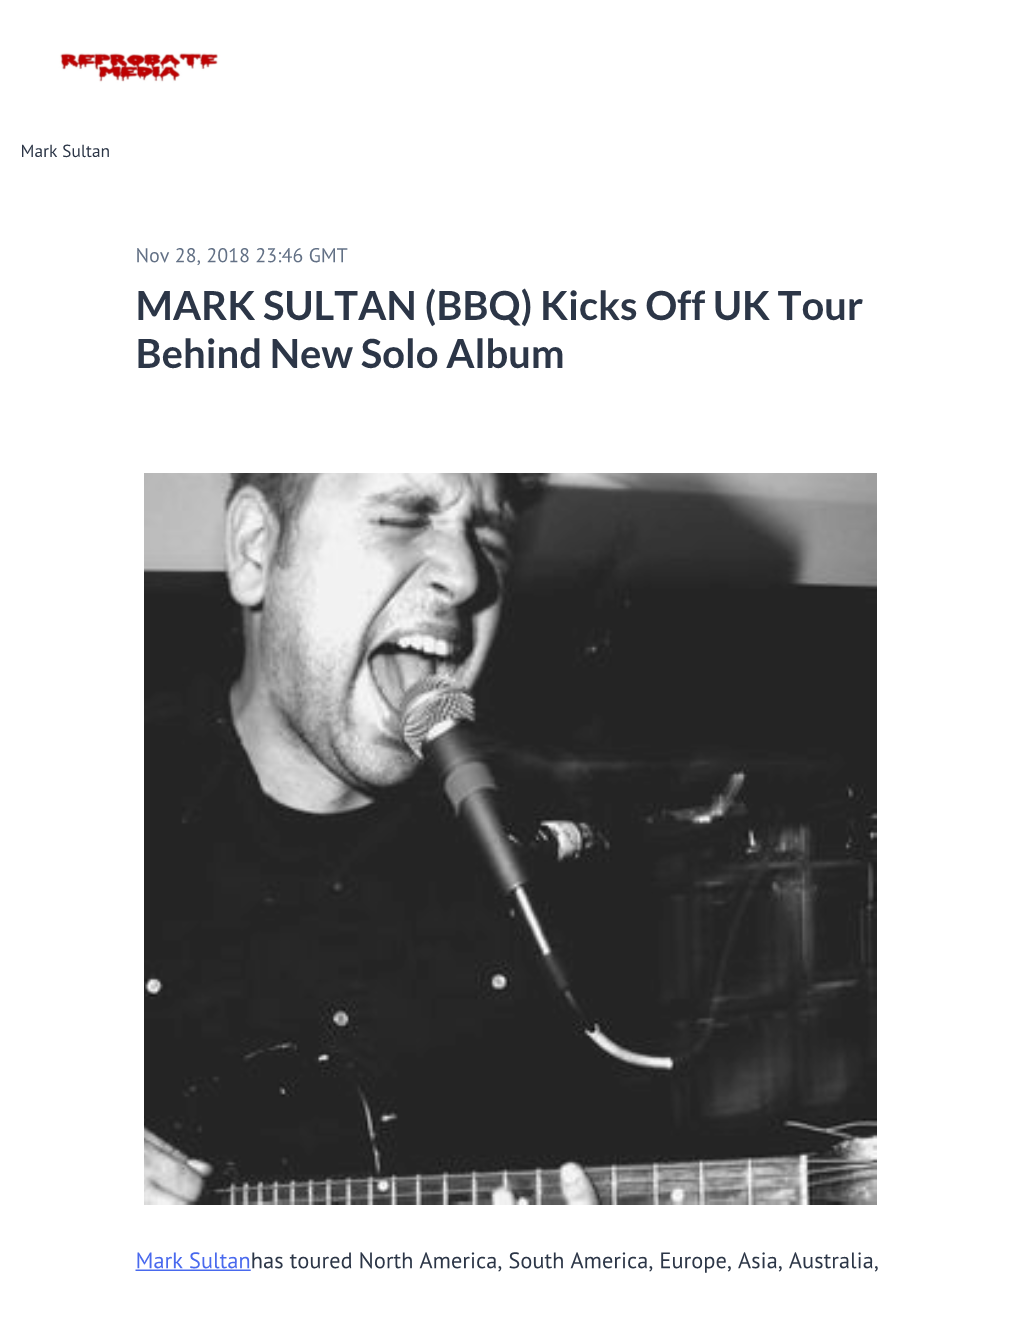 MARK SULTAN (BBQ) Kicks Off UK Tour Behind New Solo Album